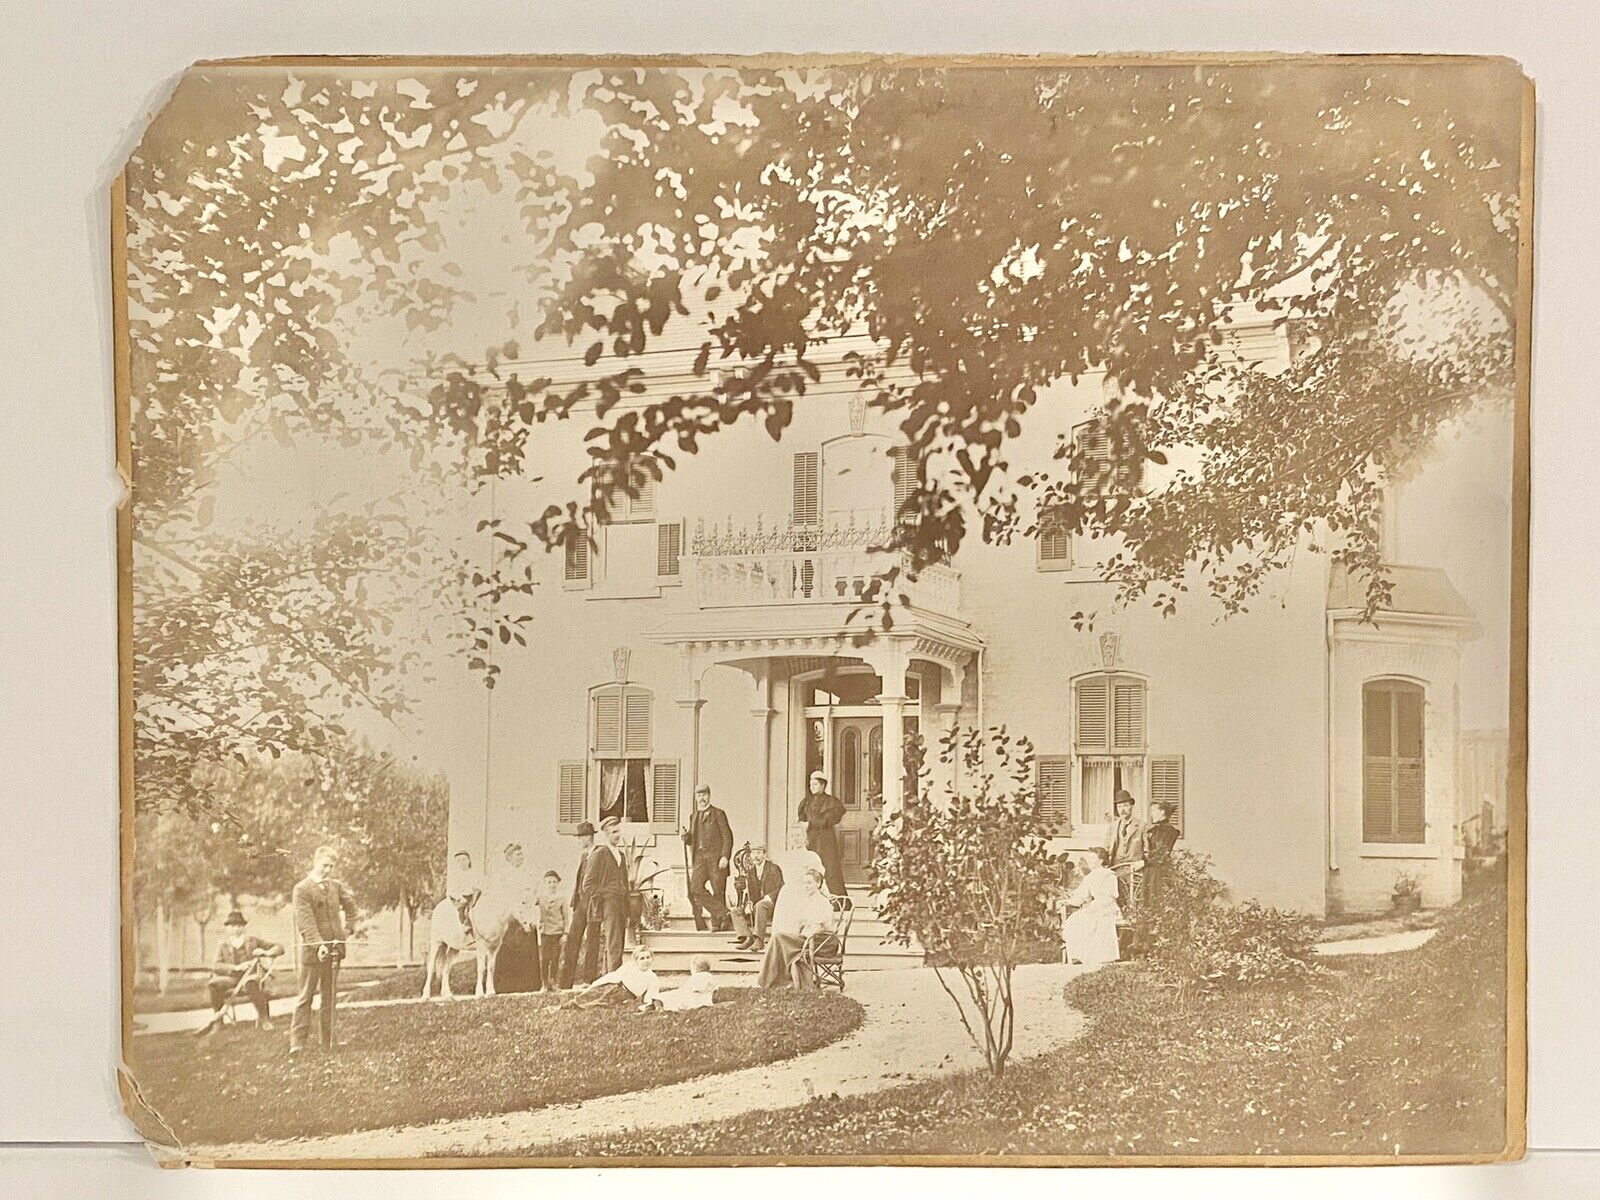 ORIGINAL 1890s Large Format Photo Of Massive Estate Having Hunting Party